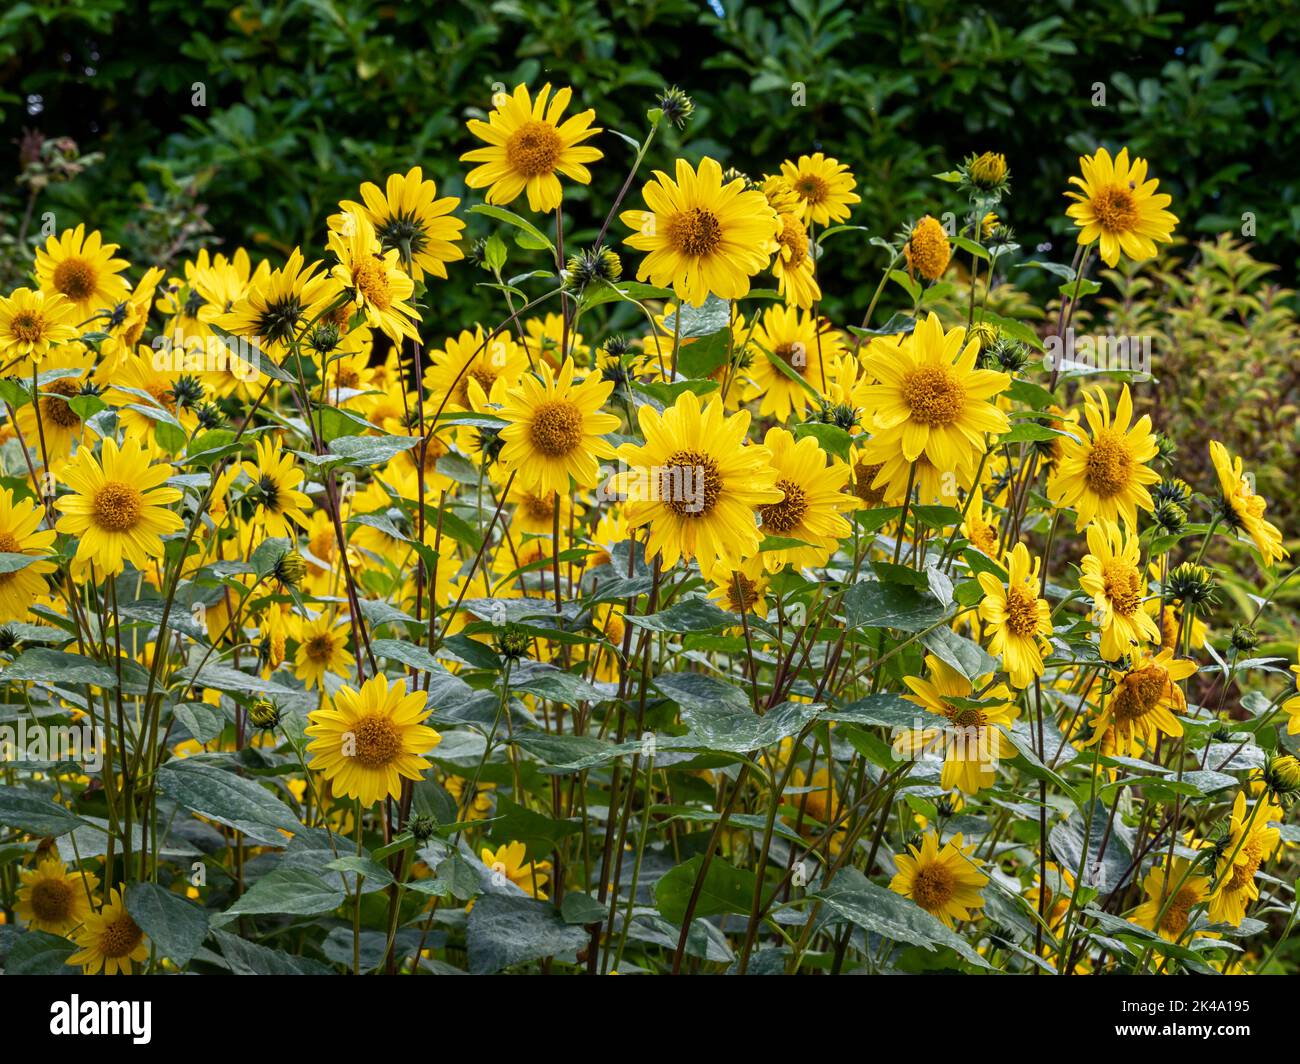 Dense sunflowers flowering in a garden bed Stock Photo